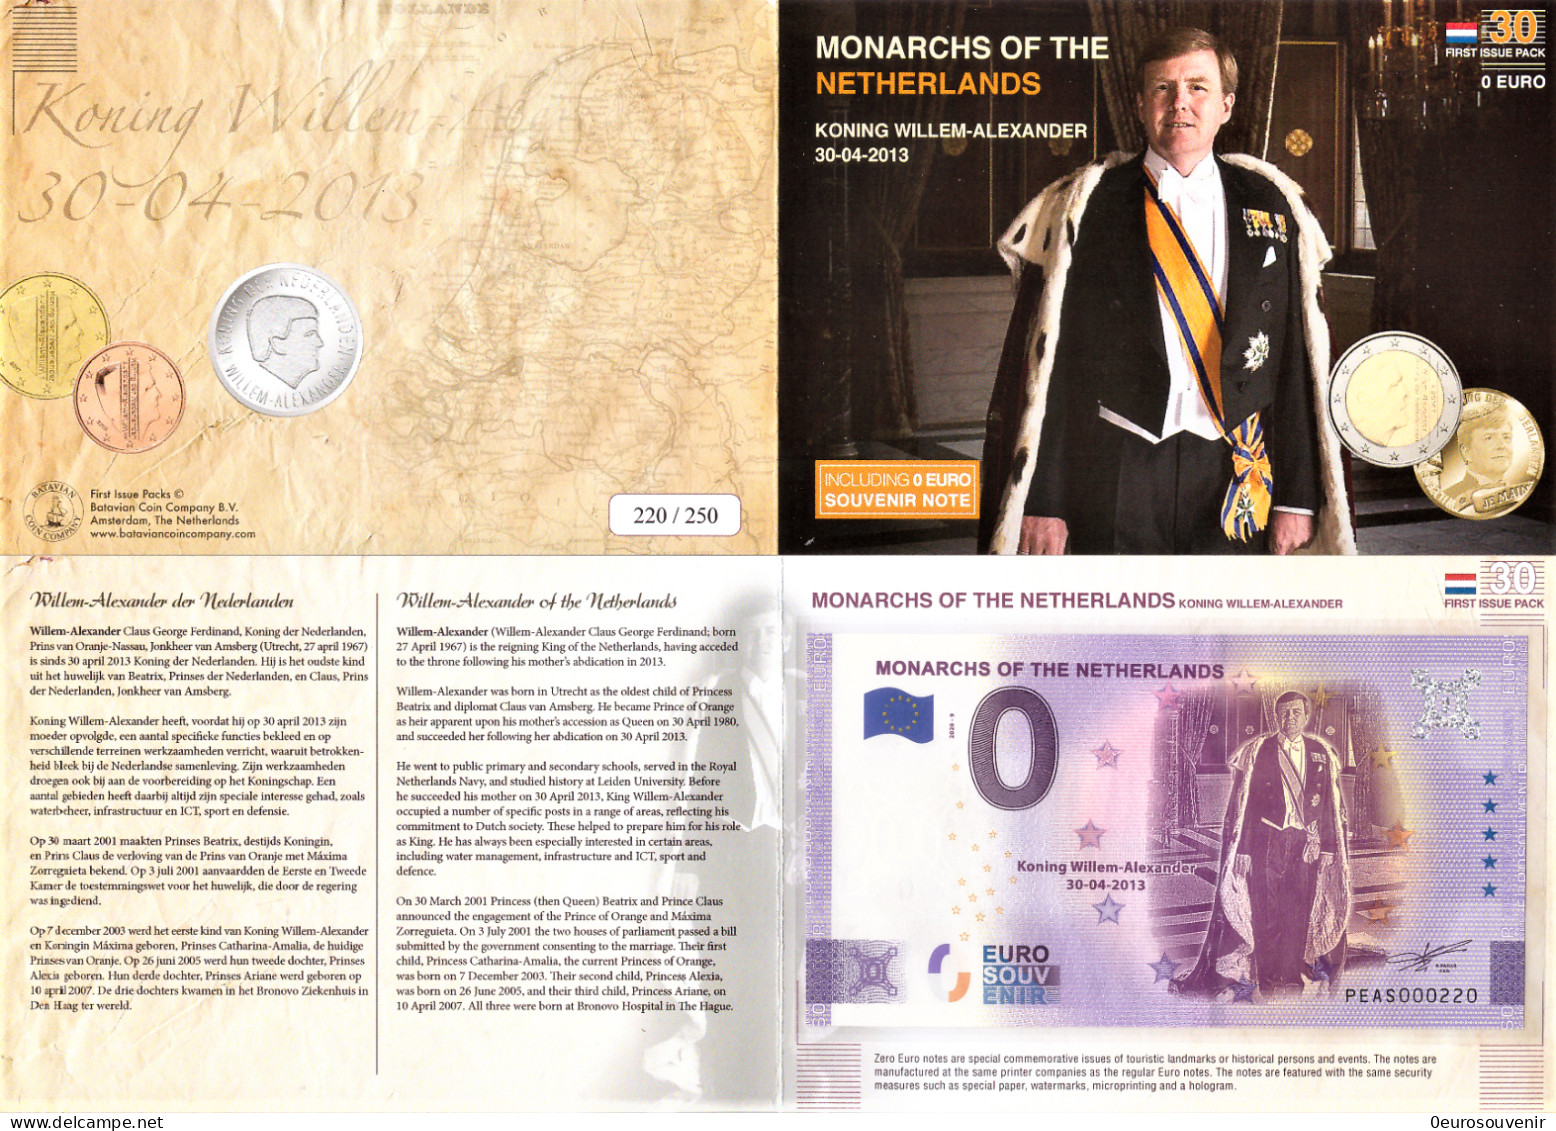 0-Euro PEAS 2020-9 MONARCHS OF THE NETHERLANDS WILLEM-ALEXANDER 30-04-2013 First Issue Pack No. Nur Bis #250 ! - Essais Privés / Non-officiels